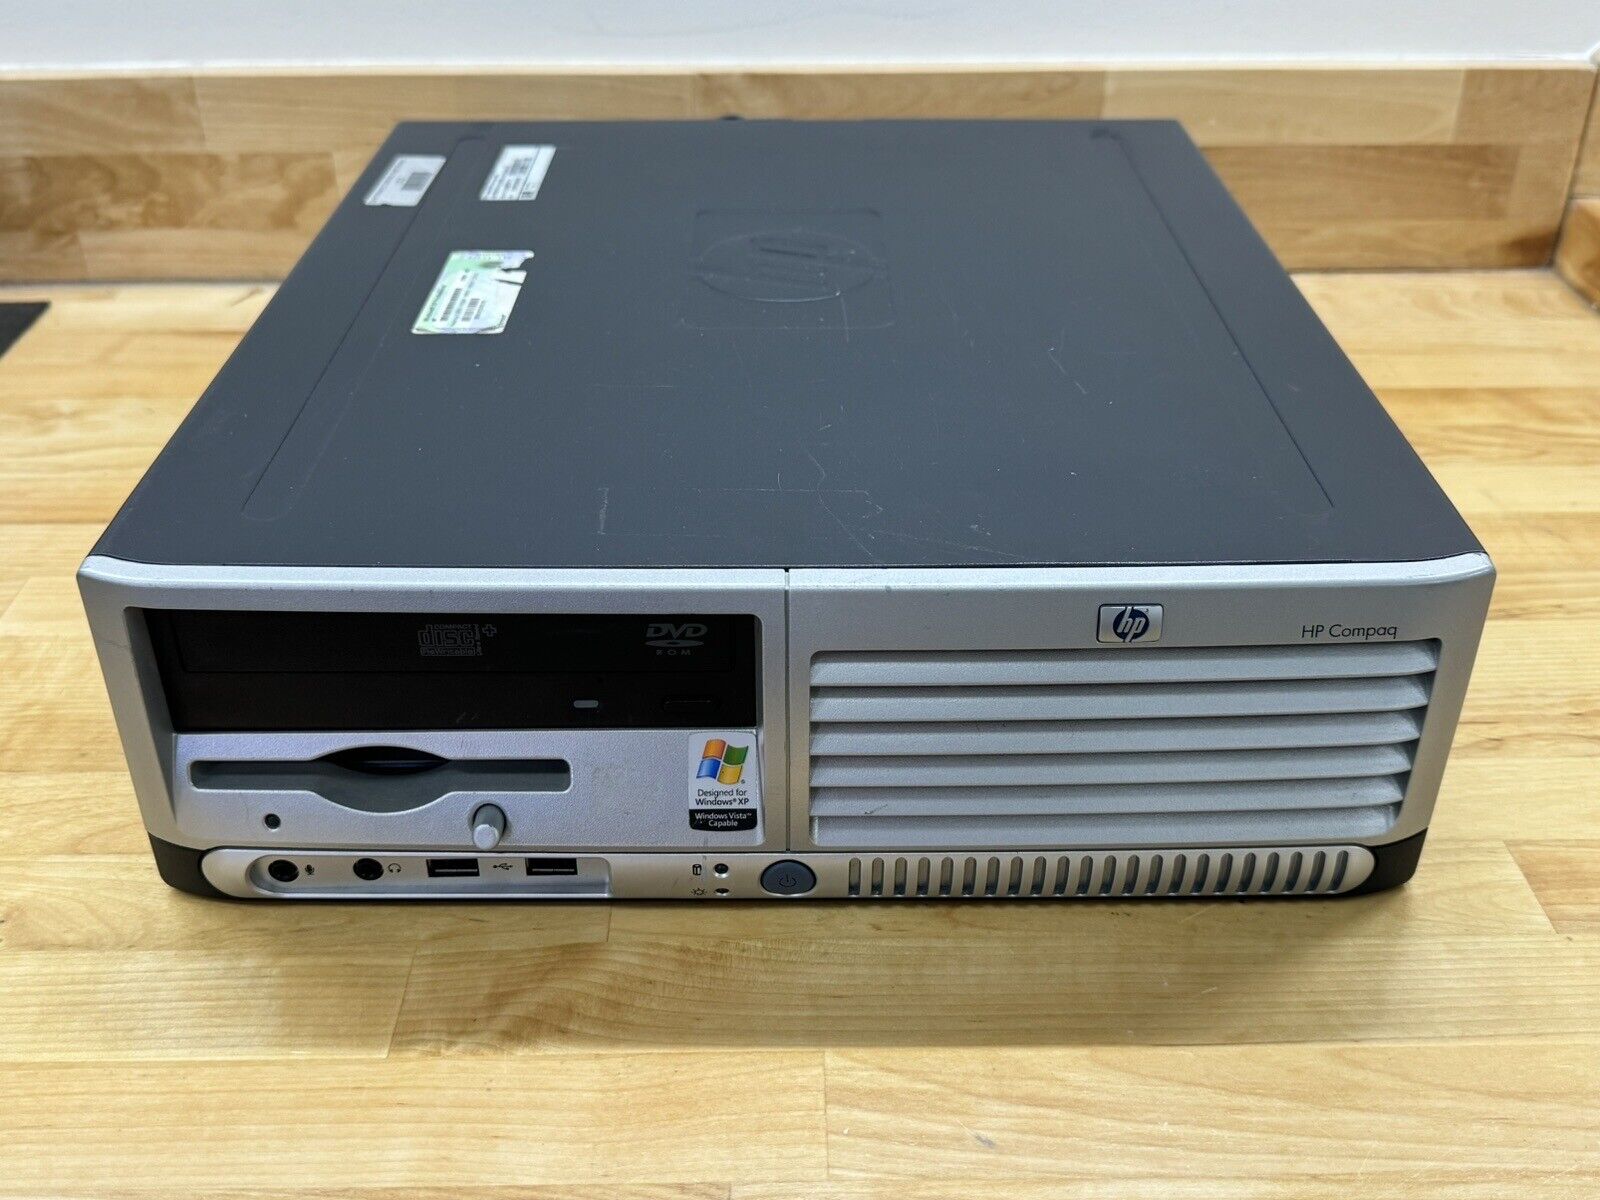 HP Compaq dc7600s Slim Intel Pentium 4 2.8 GHz 2GB RAM 80GB HDD DVD Windows XP